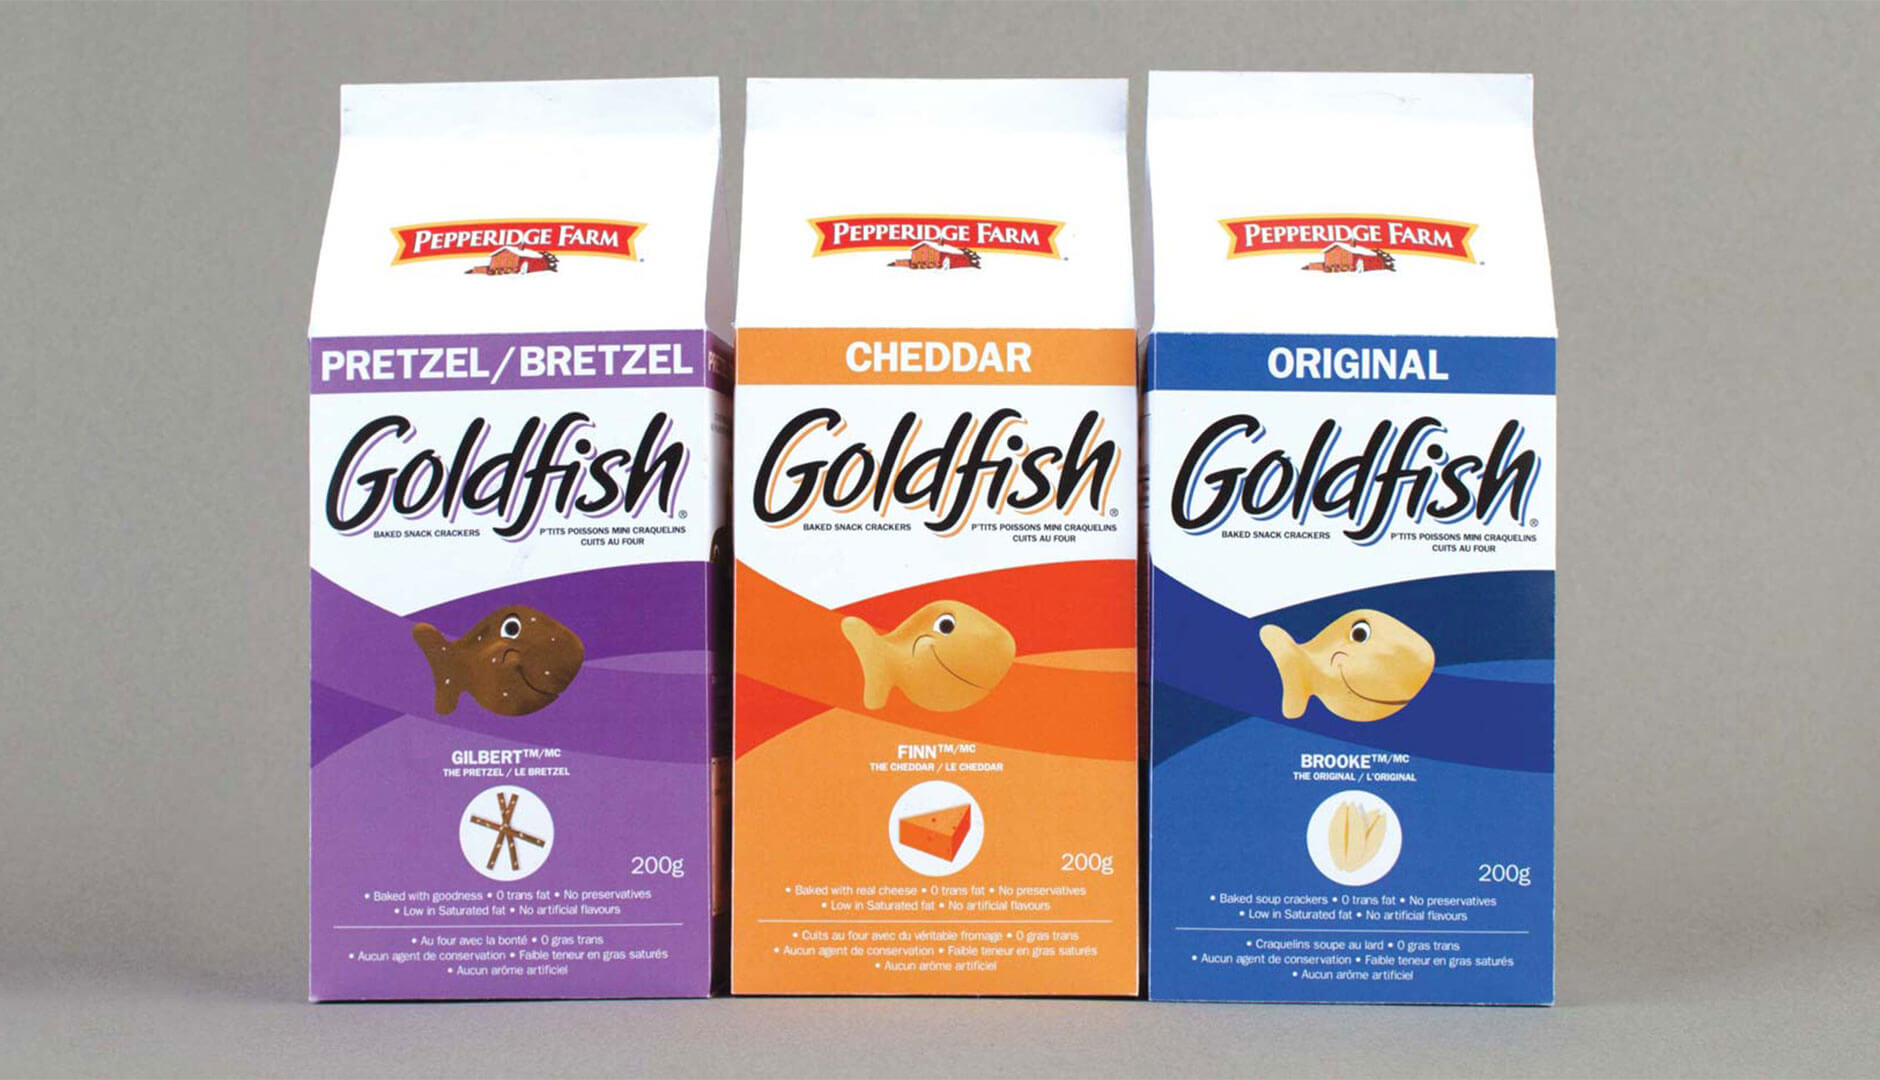 Goldfish Crackers Redesign Image 1